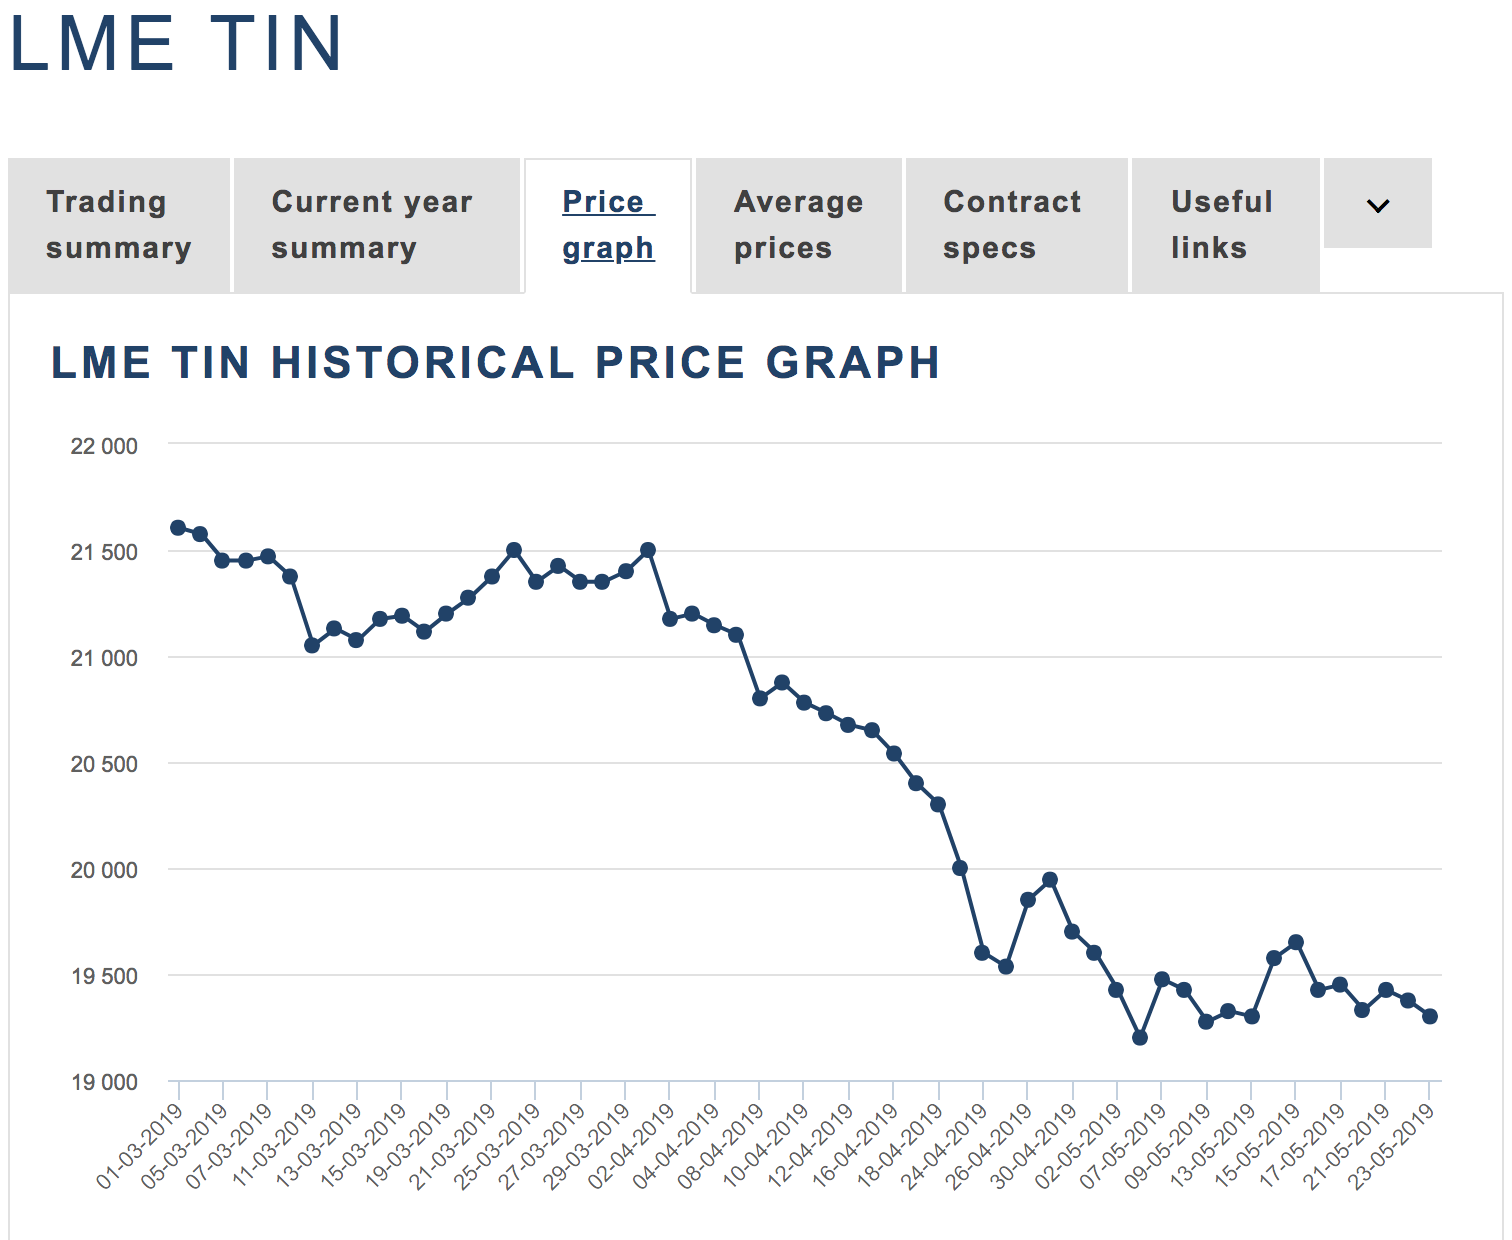 Copper Price Per Tonne Chart